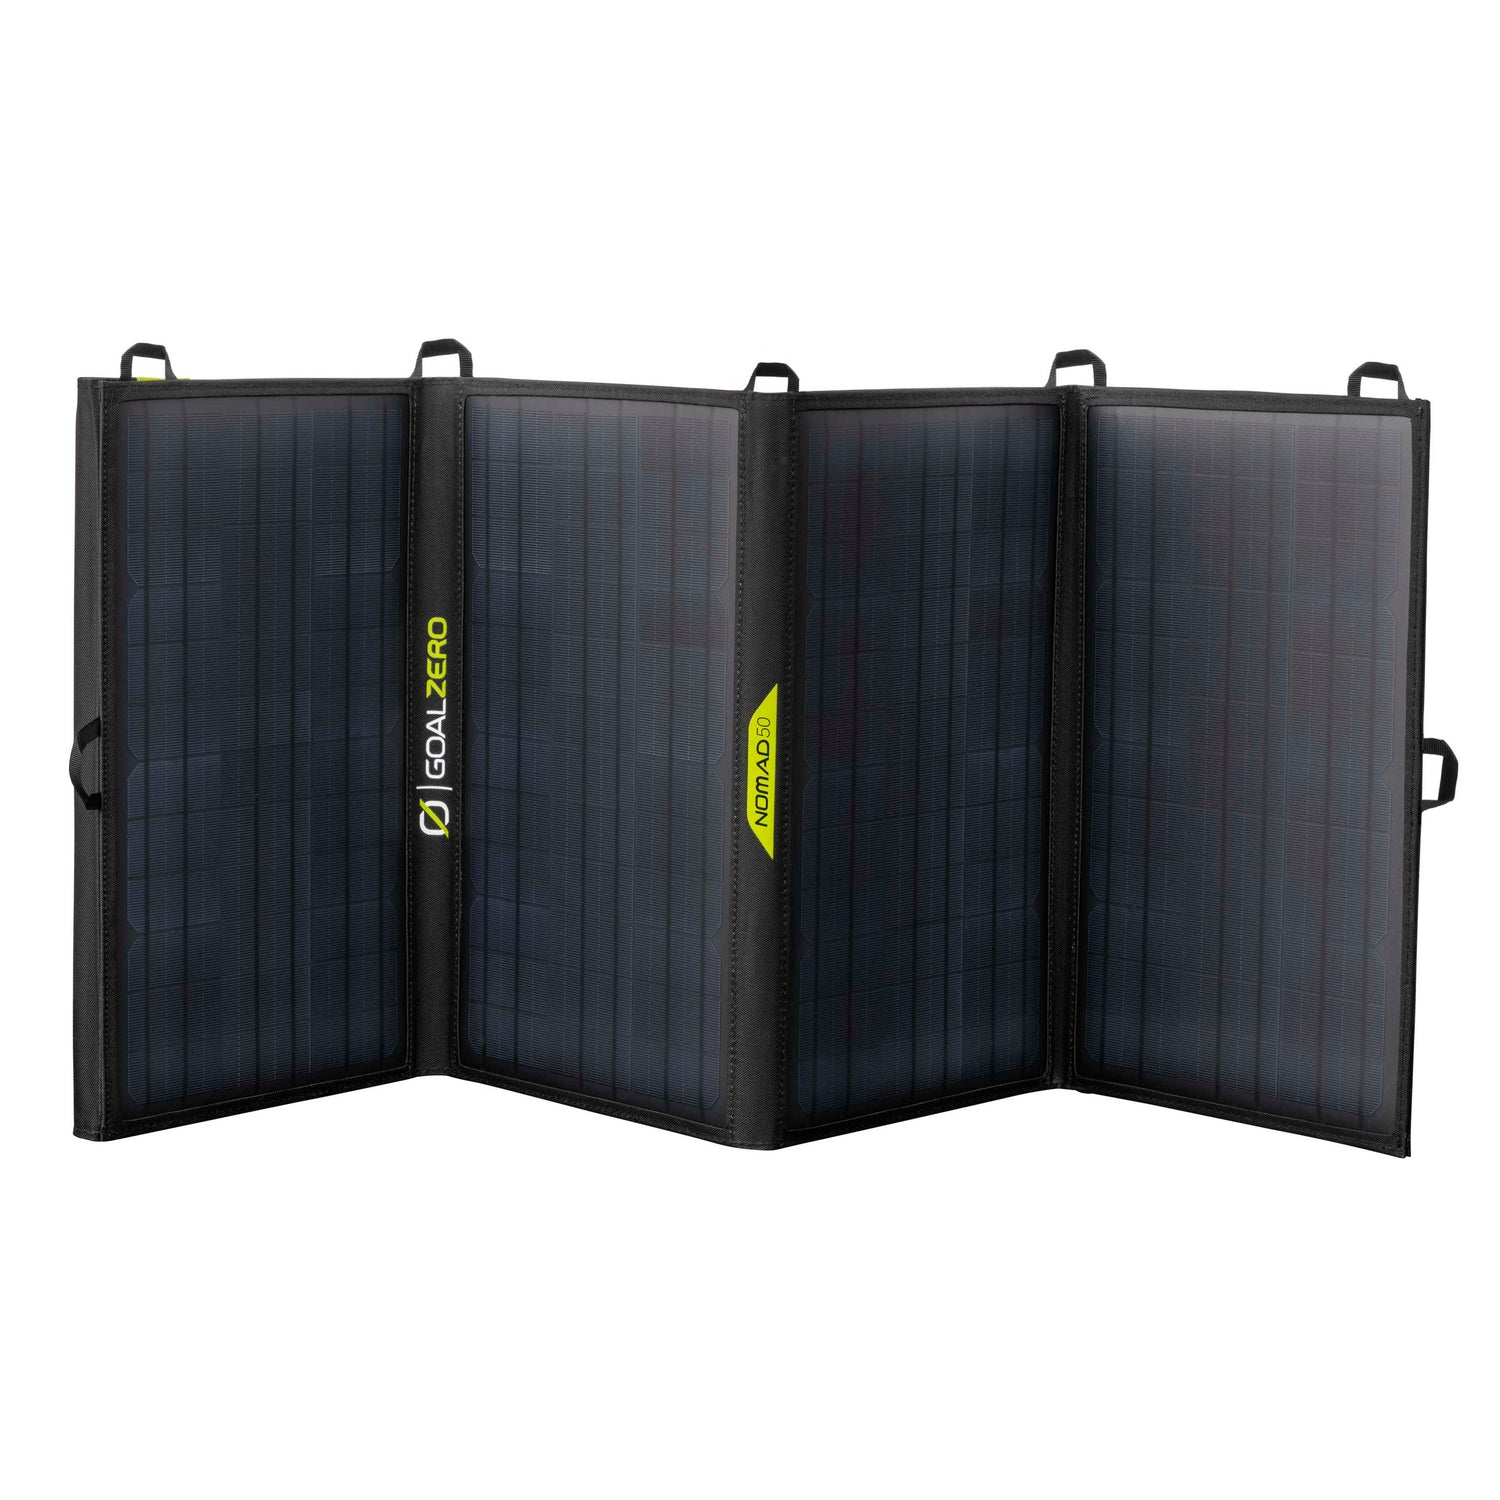 Goalzero Nomad 50 Solar Panel